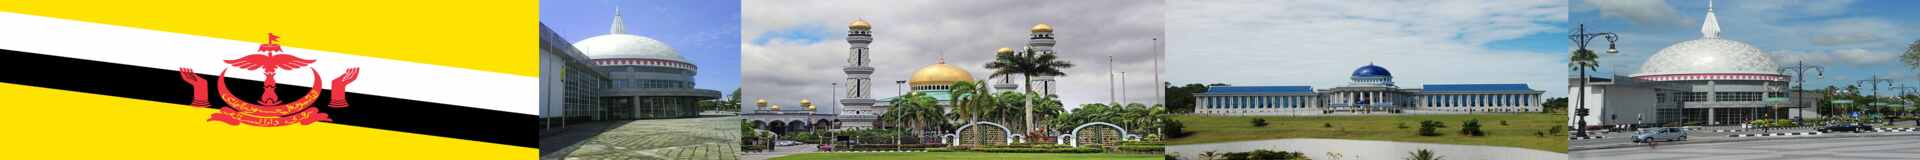 Global Brunei Business Development Consultancy Tenders